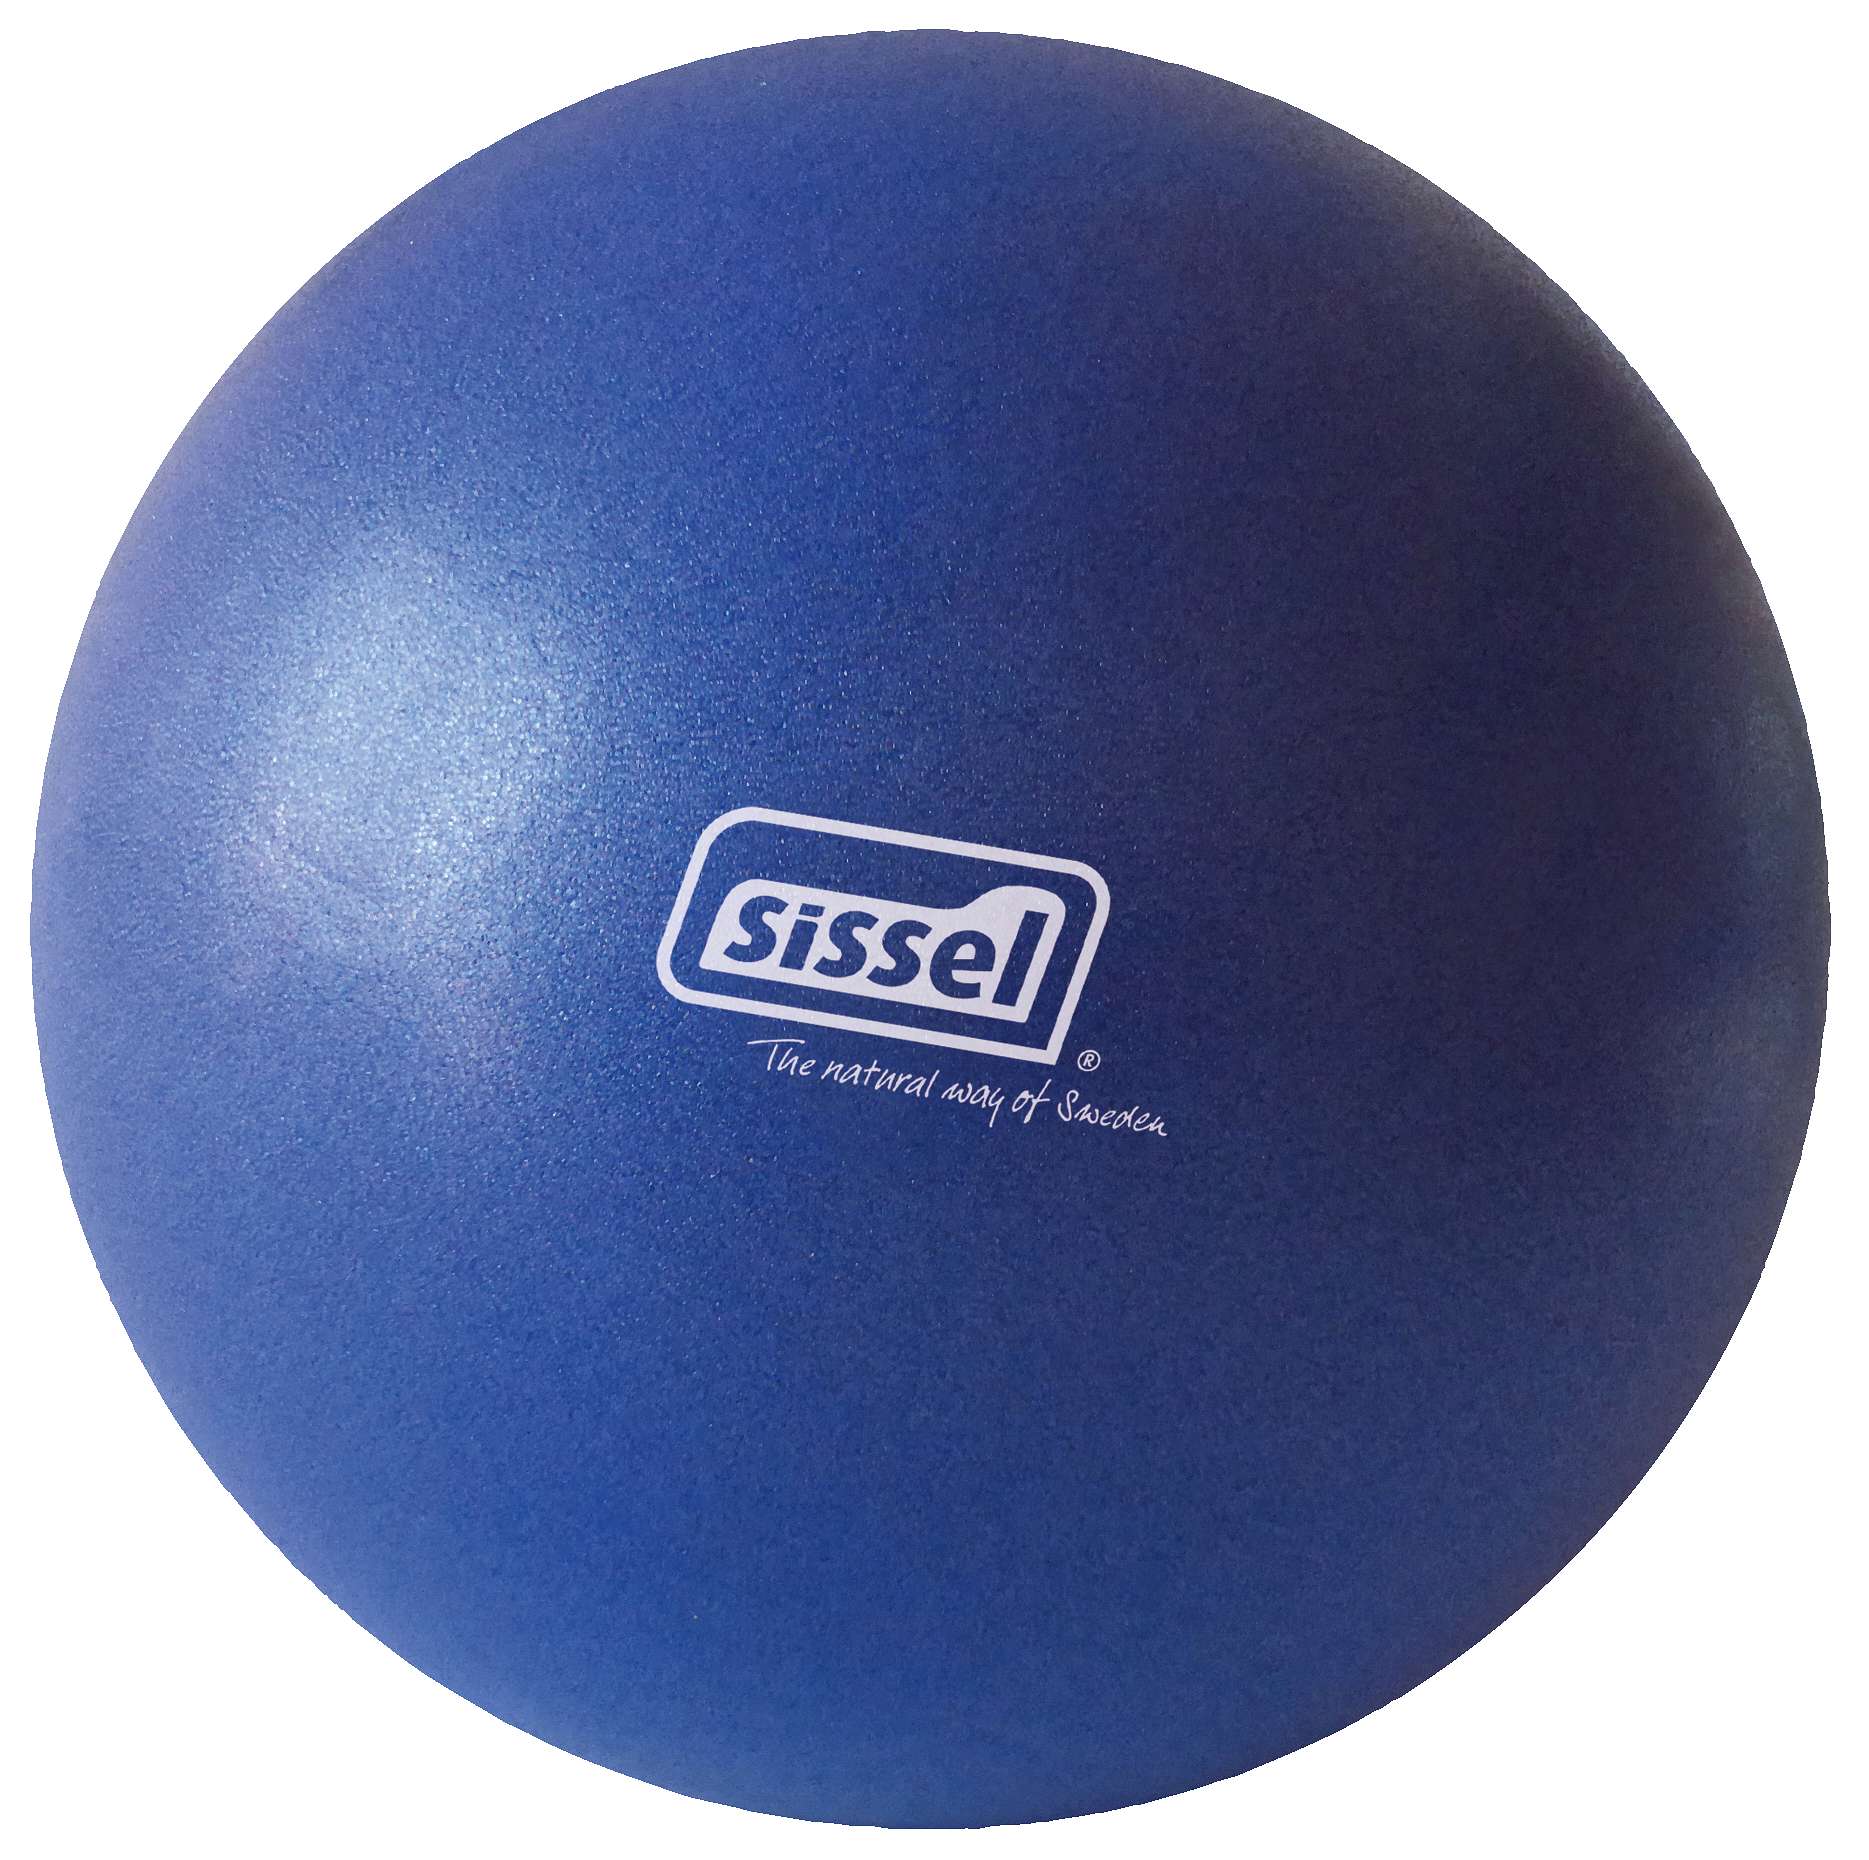 Sissel Pilates-Ball "Soft", ø 26 cm, Blau von Sissel